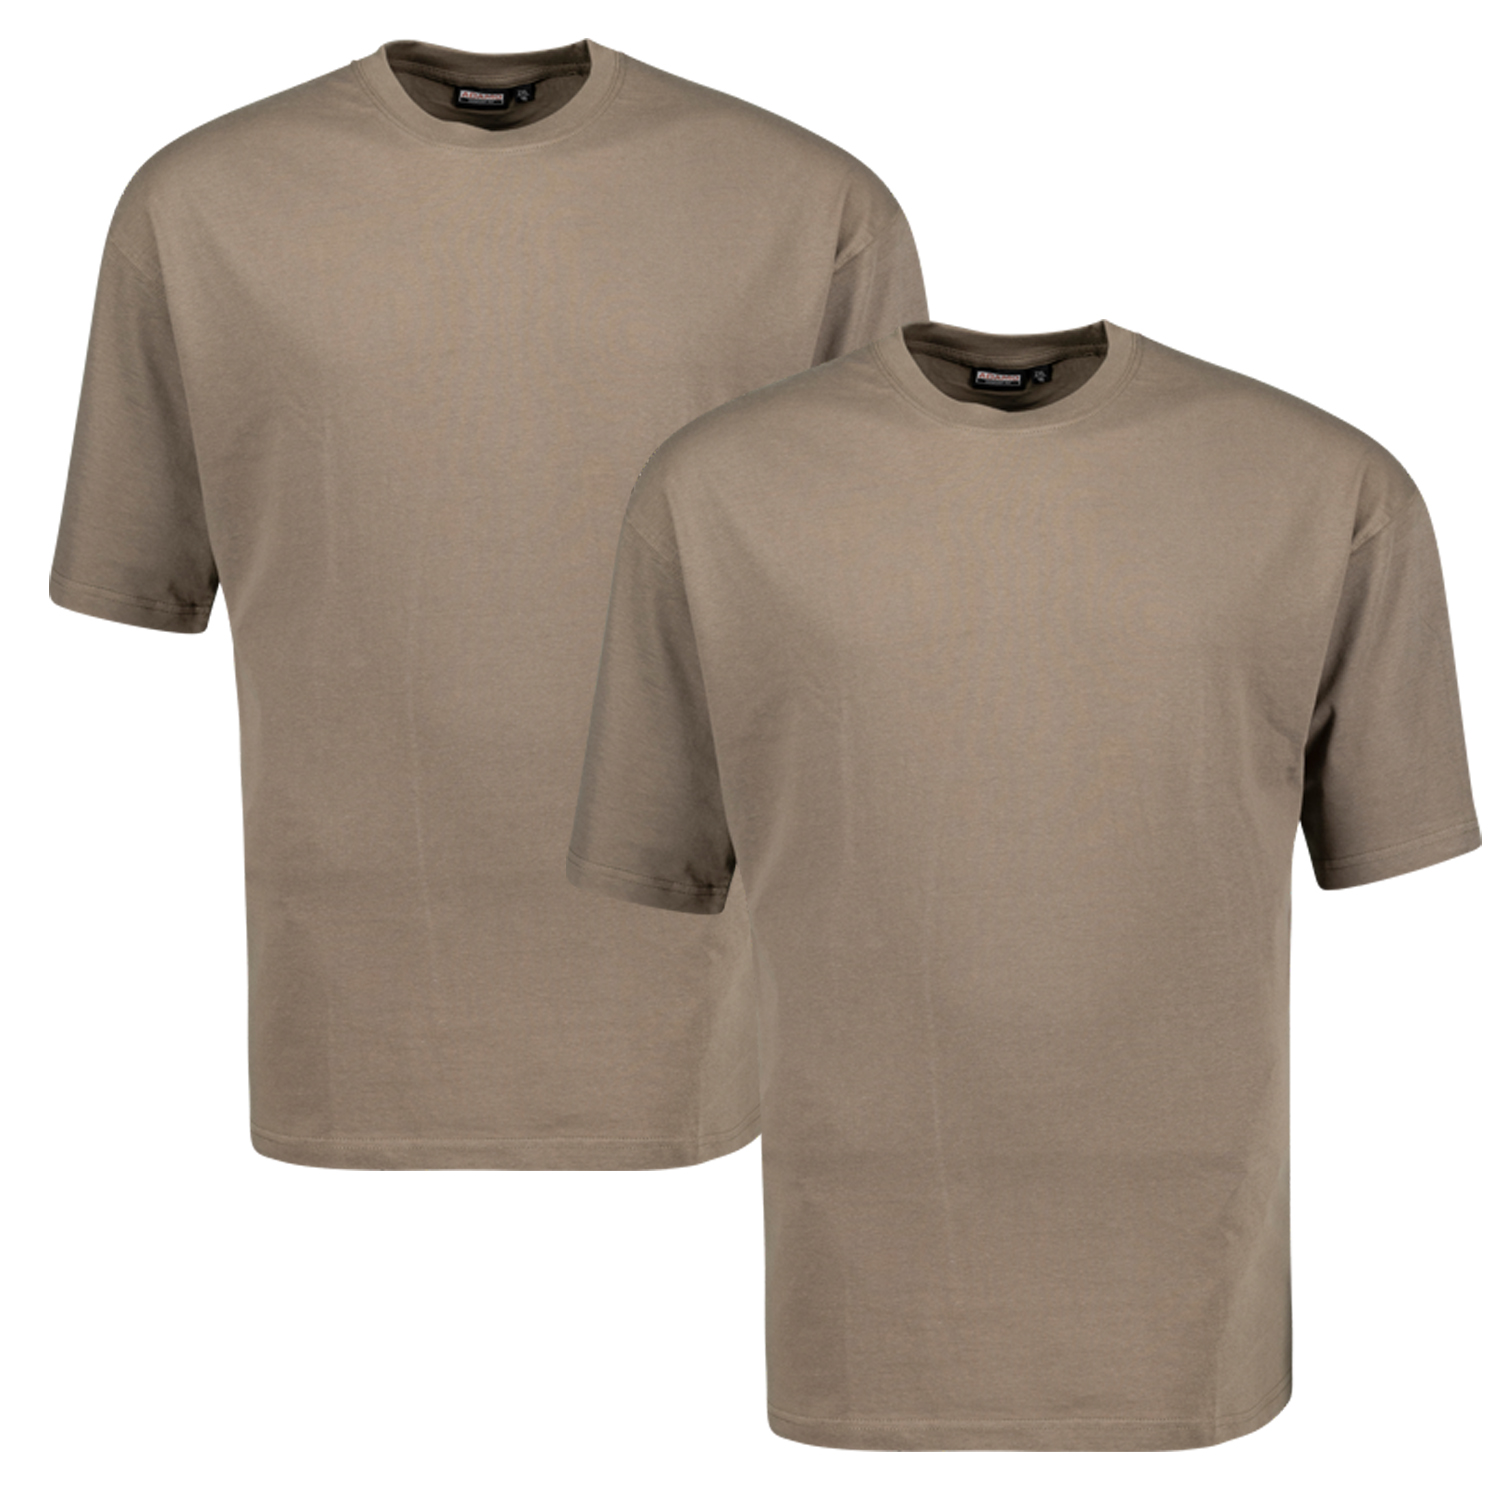 Double pack khaki MARLON t-shirt COMFORT FIT by ADAMO up to kingsize 12XL